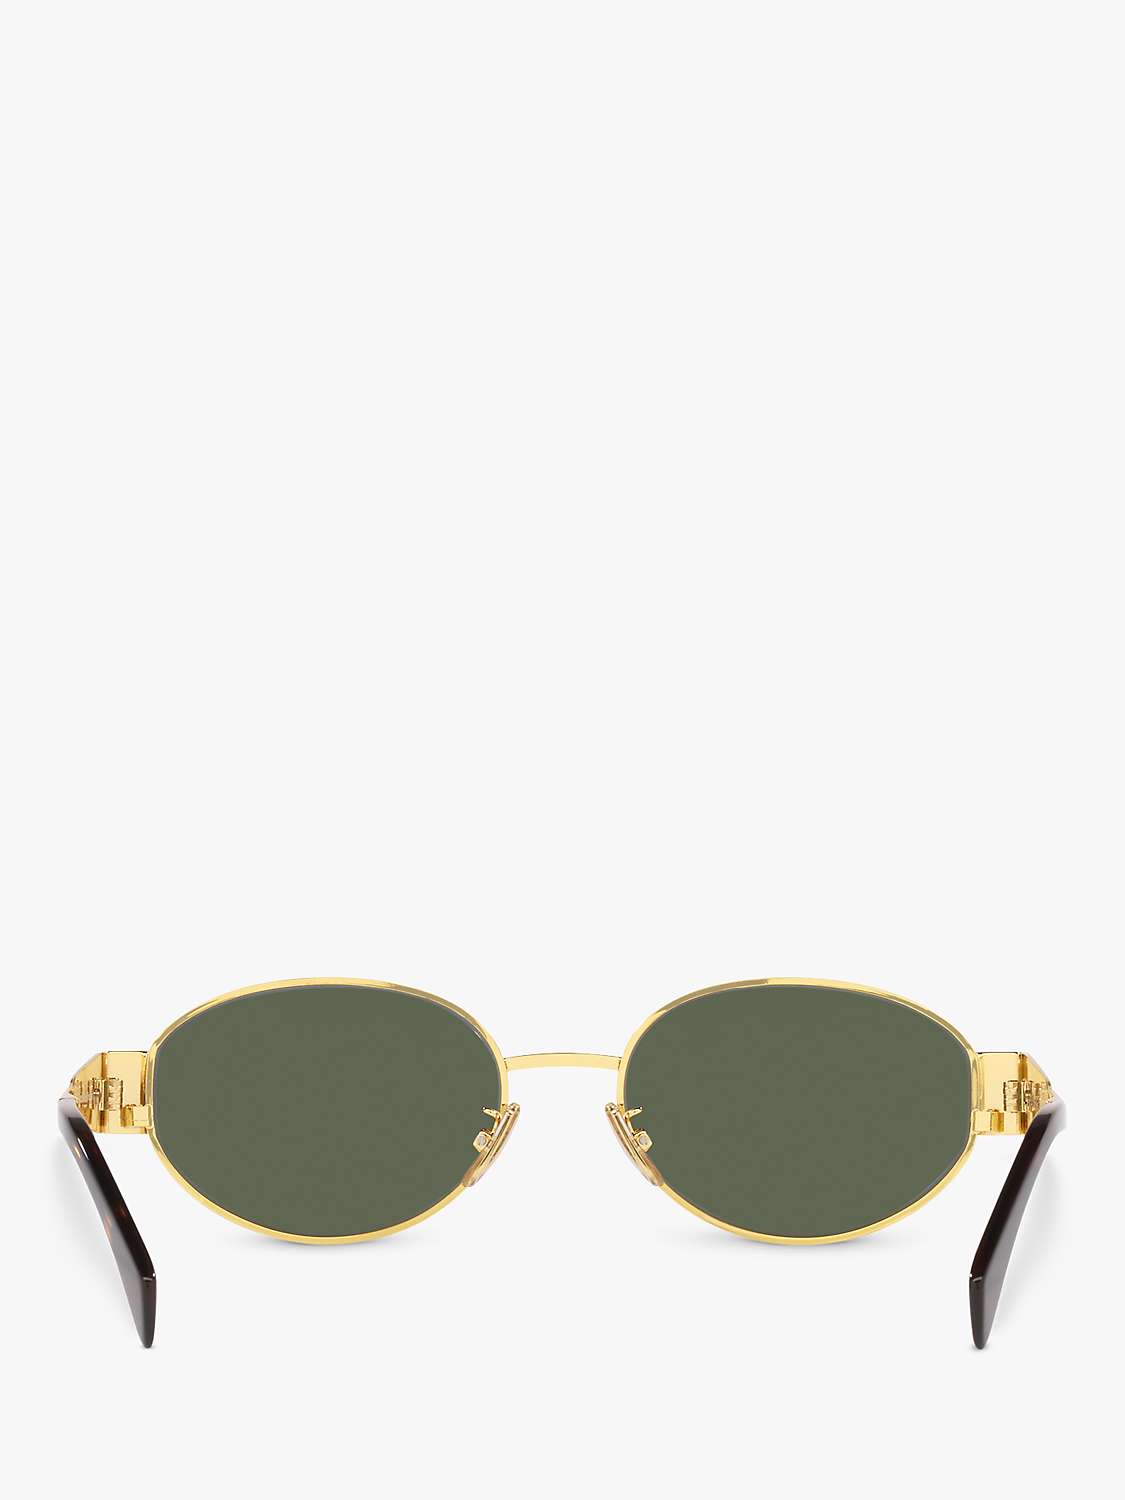 Buy Celine CD001594 Women's Oval Sunglasses, Gold Online at johnlewis.com